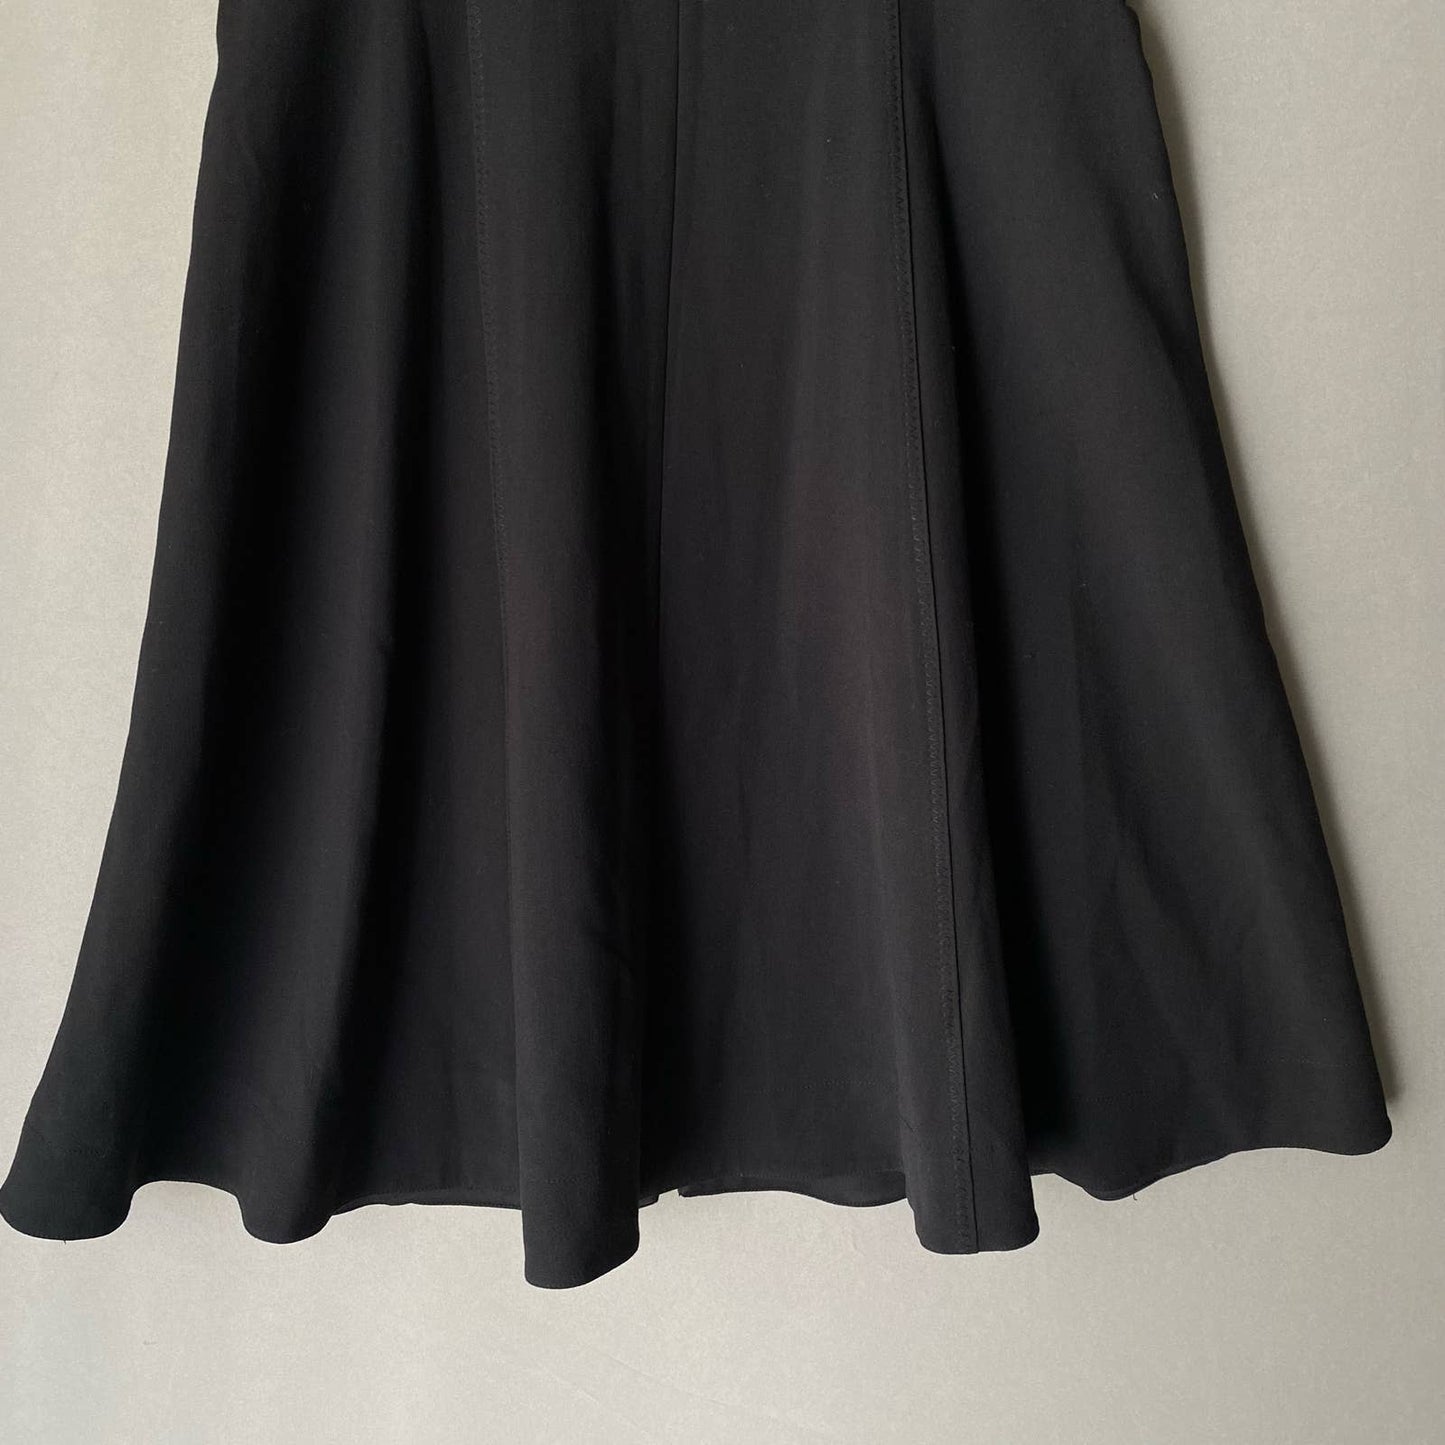 White House black market sz 6 zip sheath flare dress